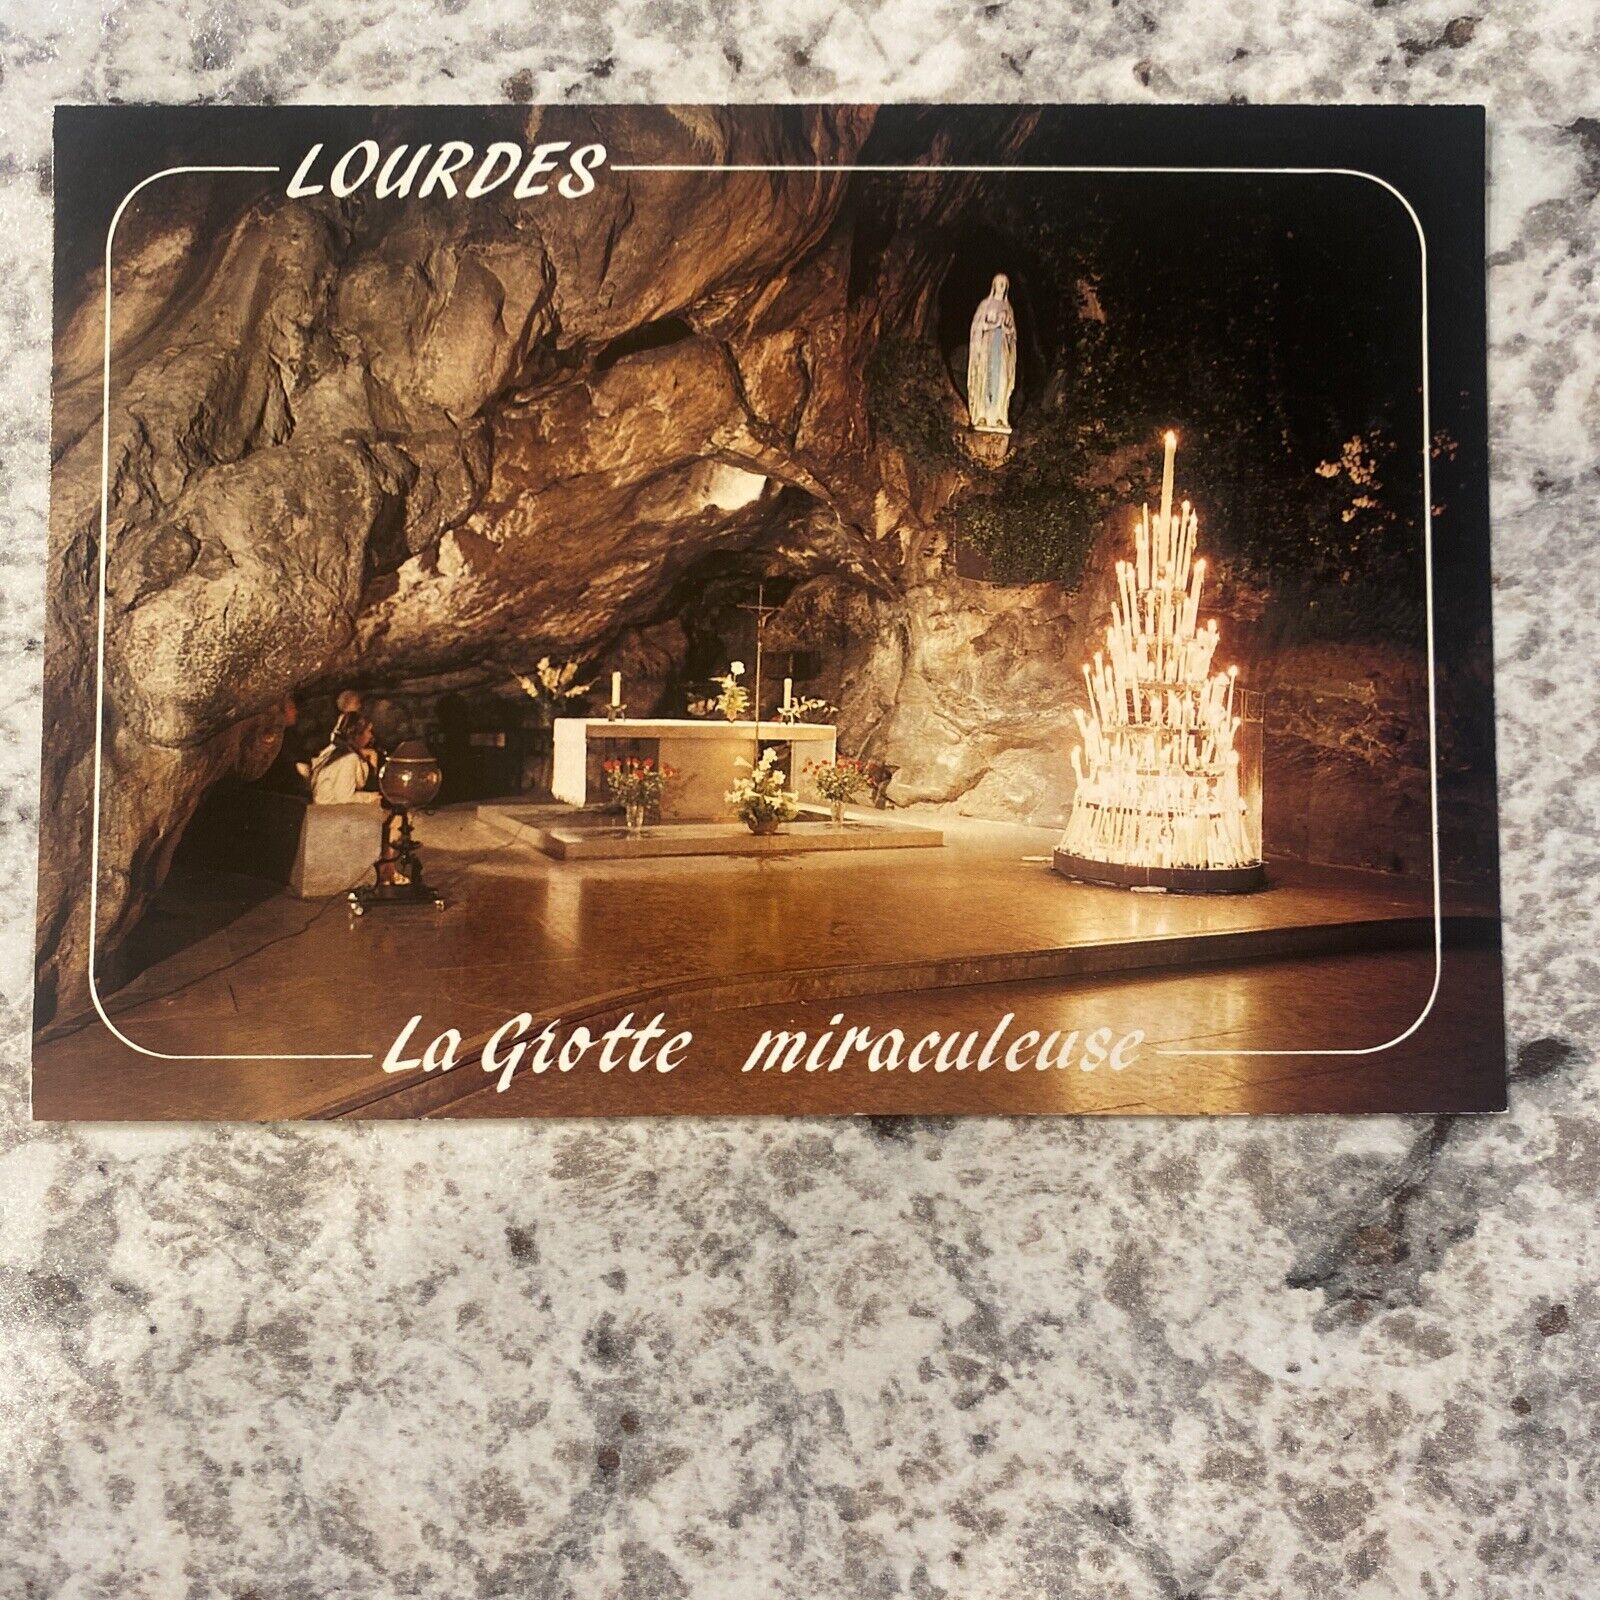 Lourdes Grotto Miraculous Postcard France Candles Rocks Cave Church